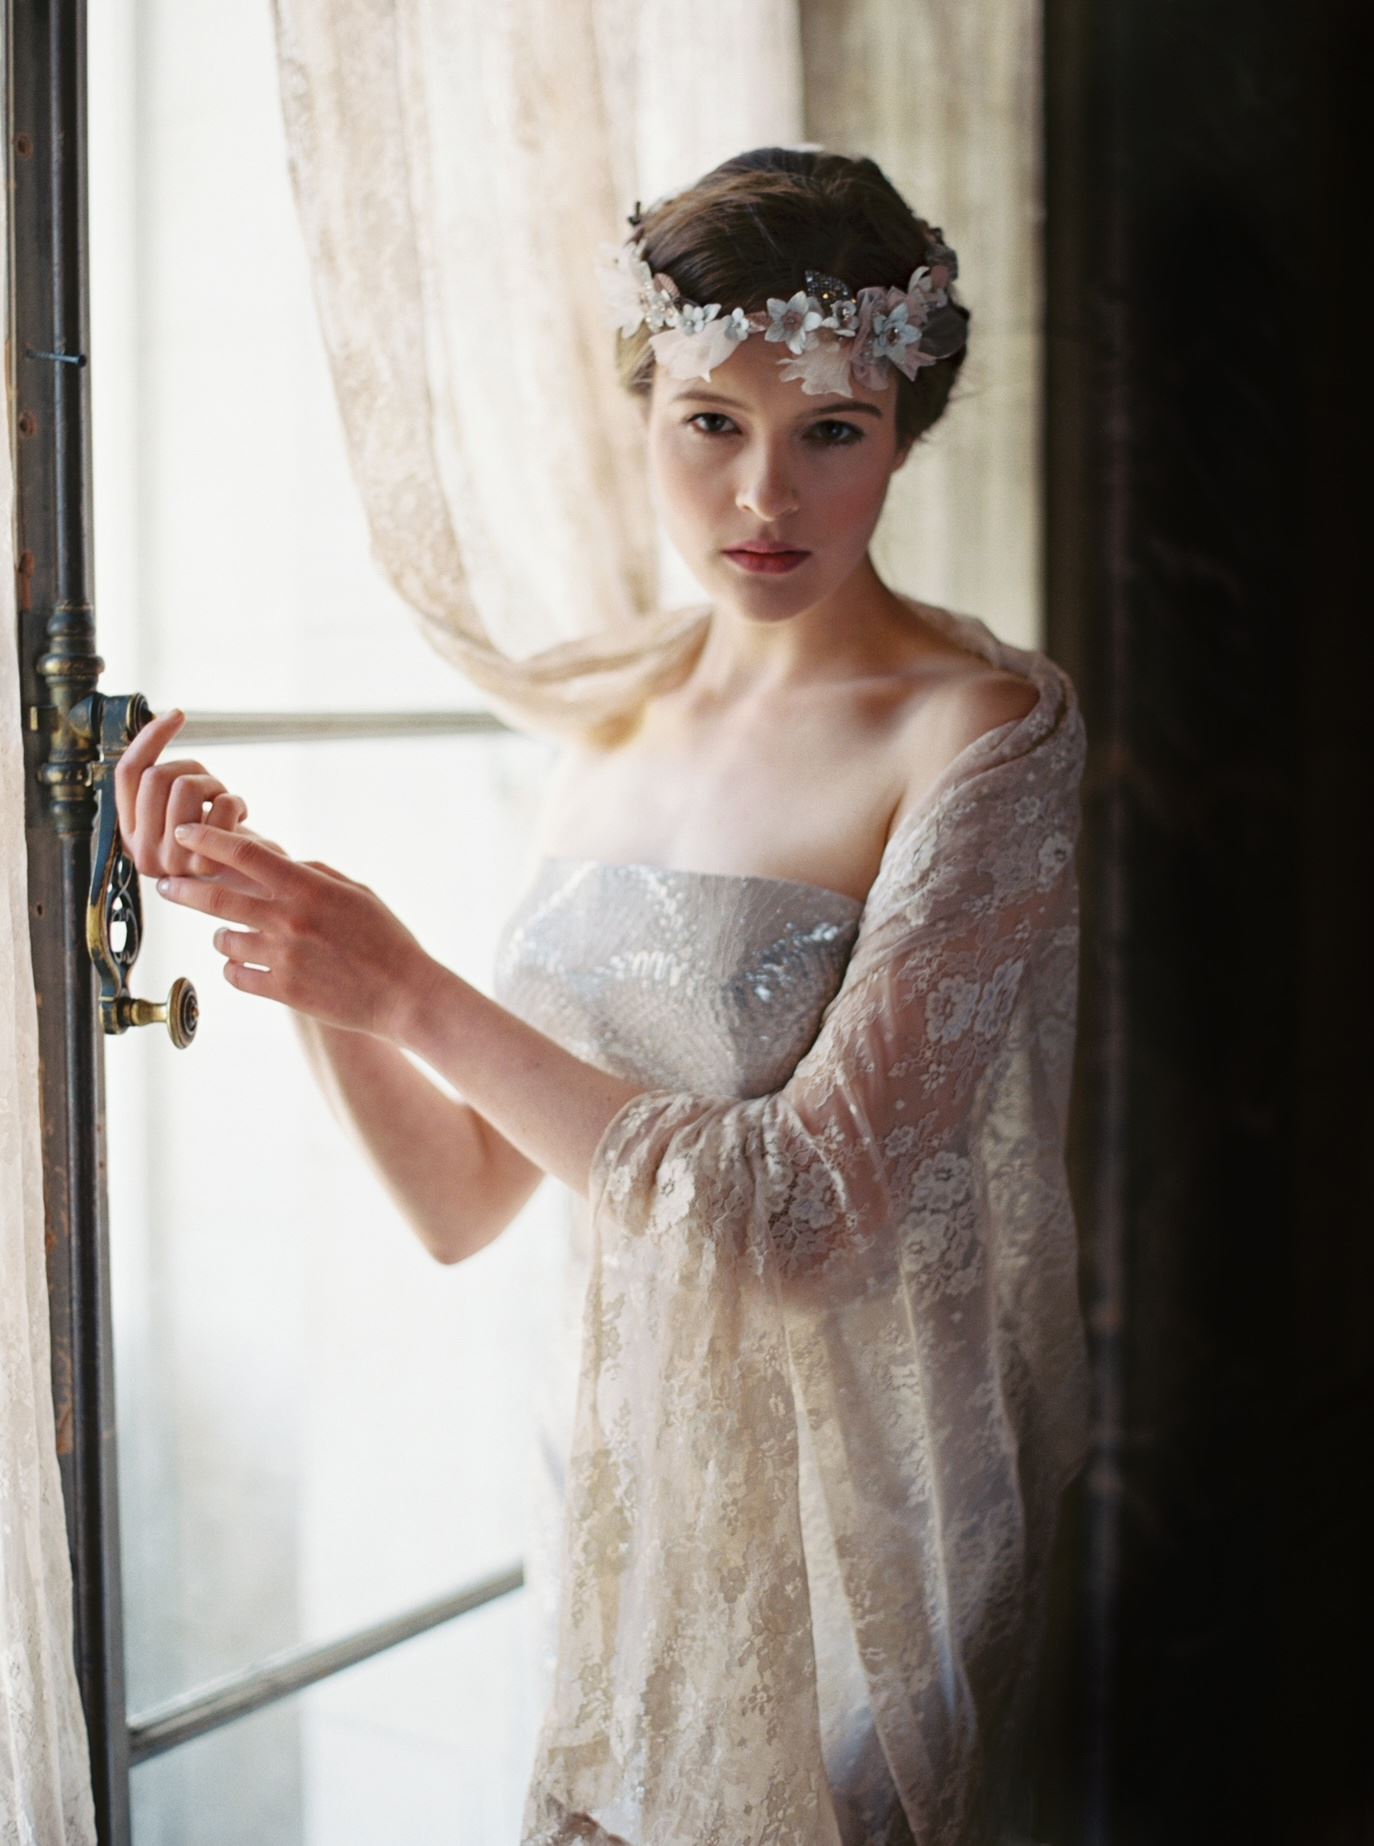 Model wearing a bridal gown near the window